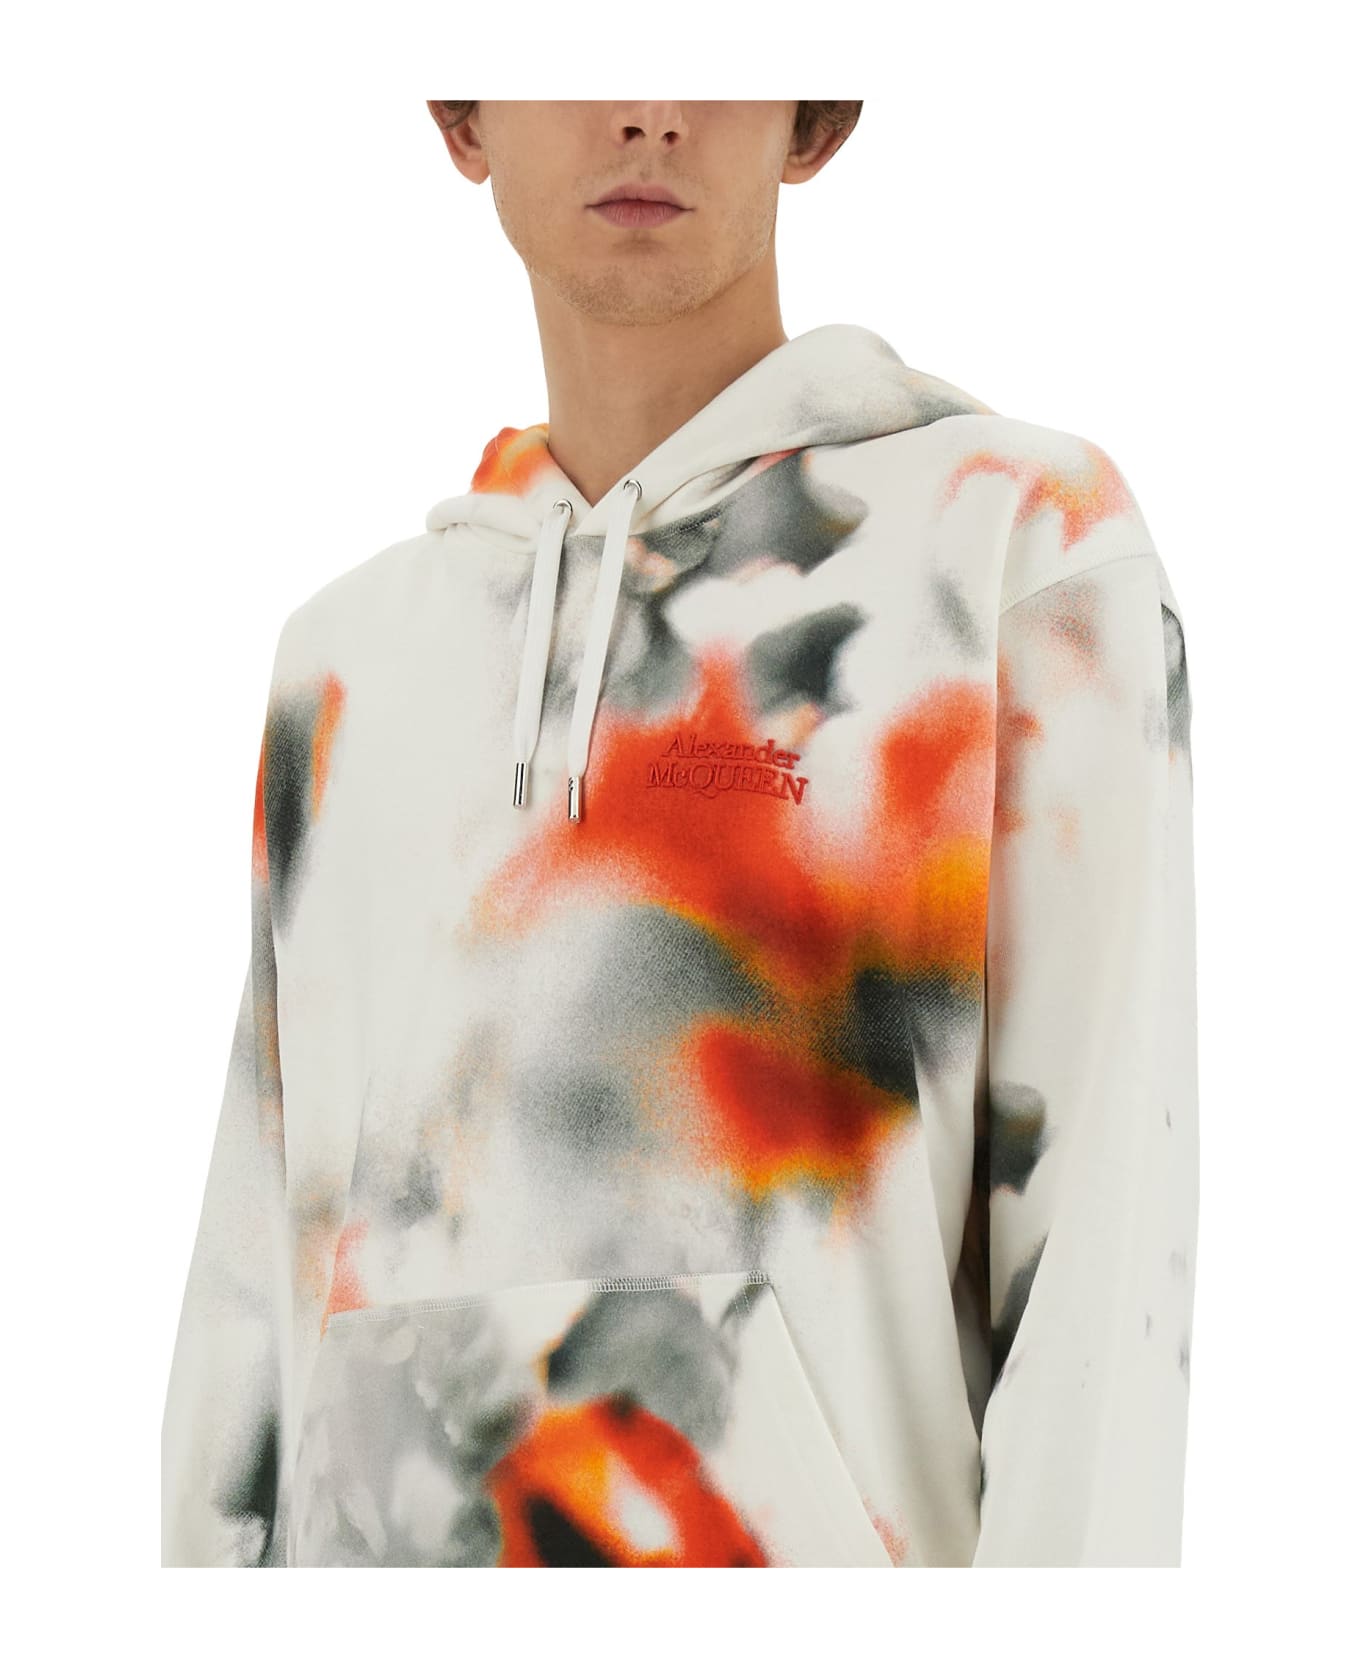 Alexander McQueen Obscured Flower Sweatshirt - White